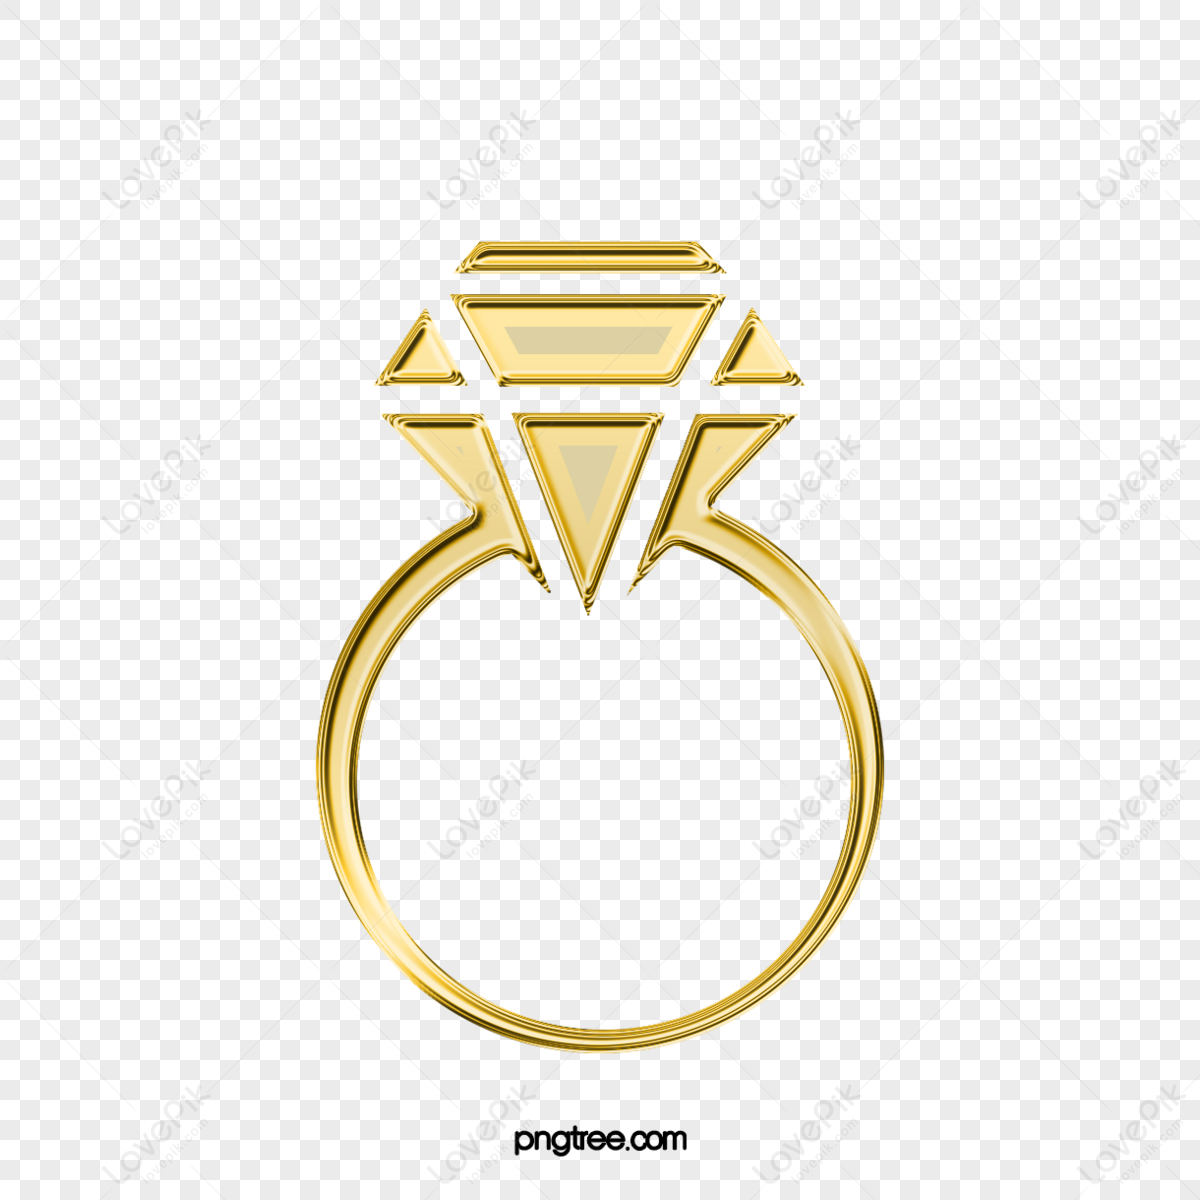 Wedding Ring Logo - Free Vectors & PSDs to Download